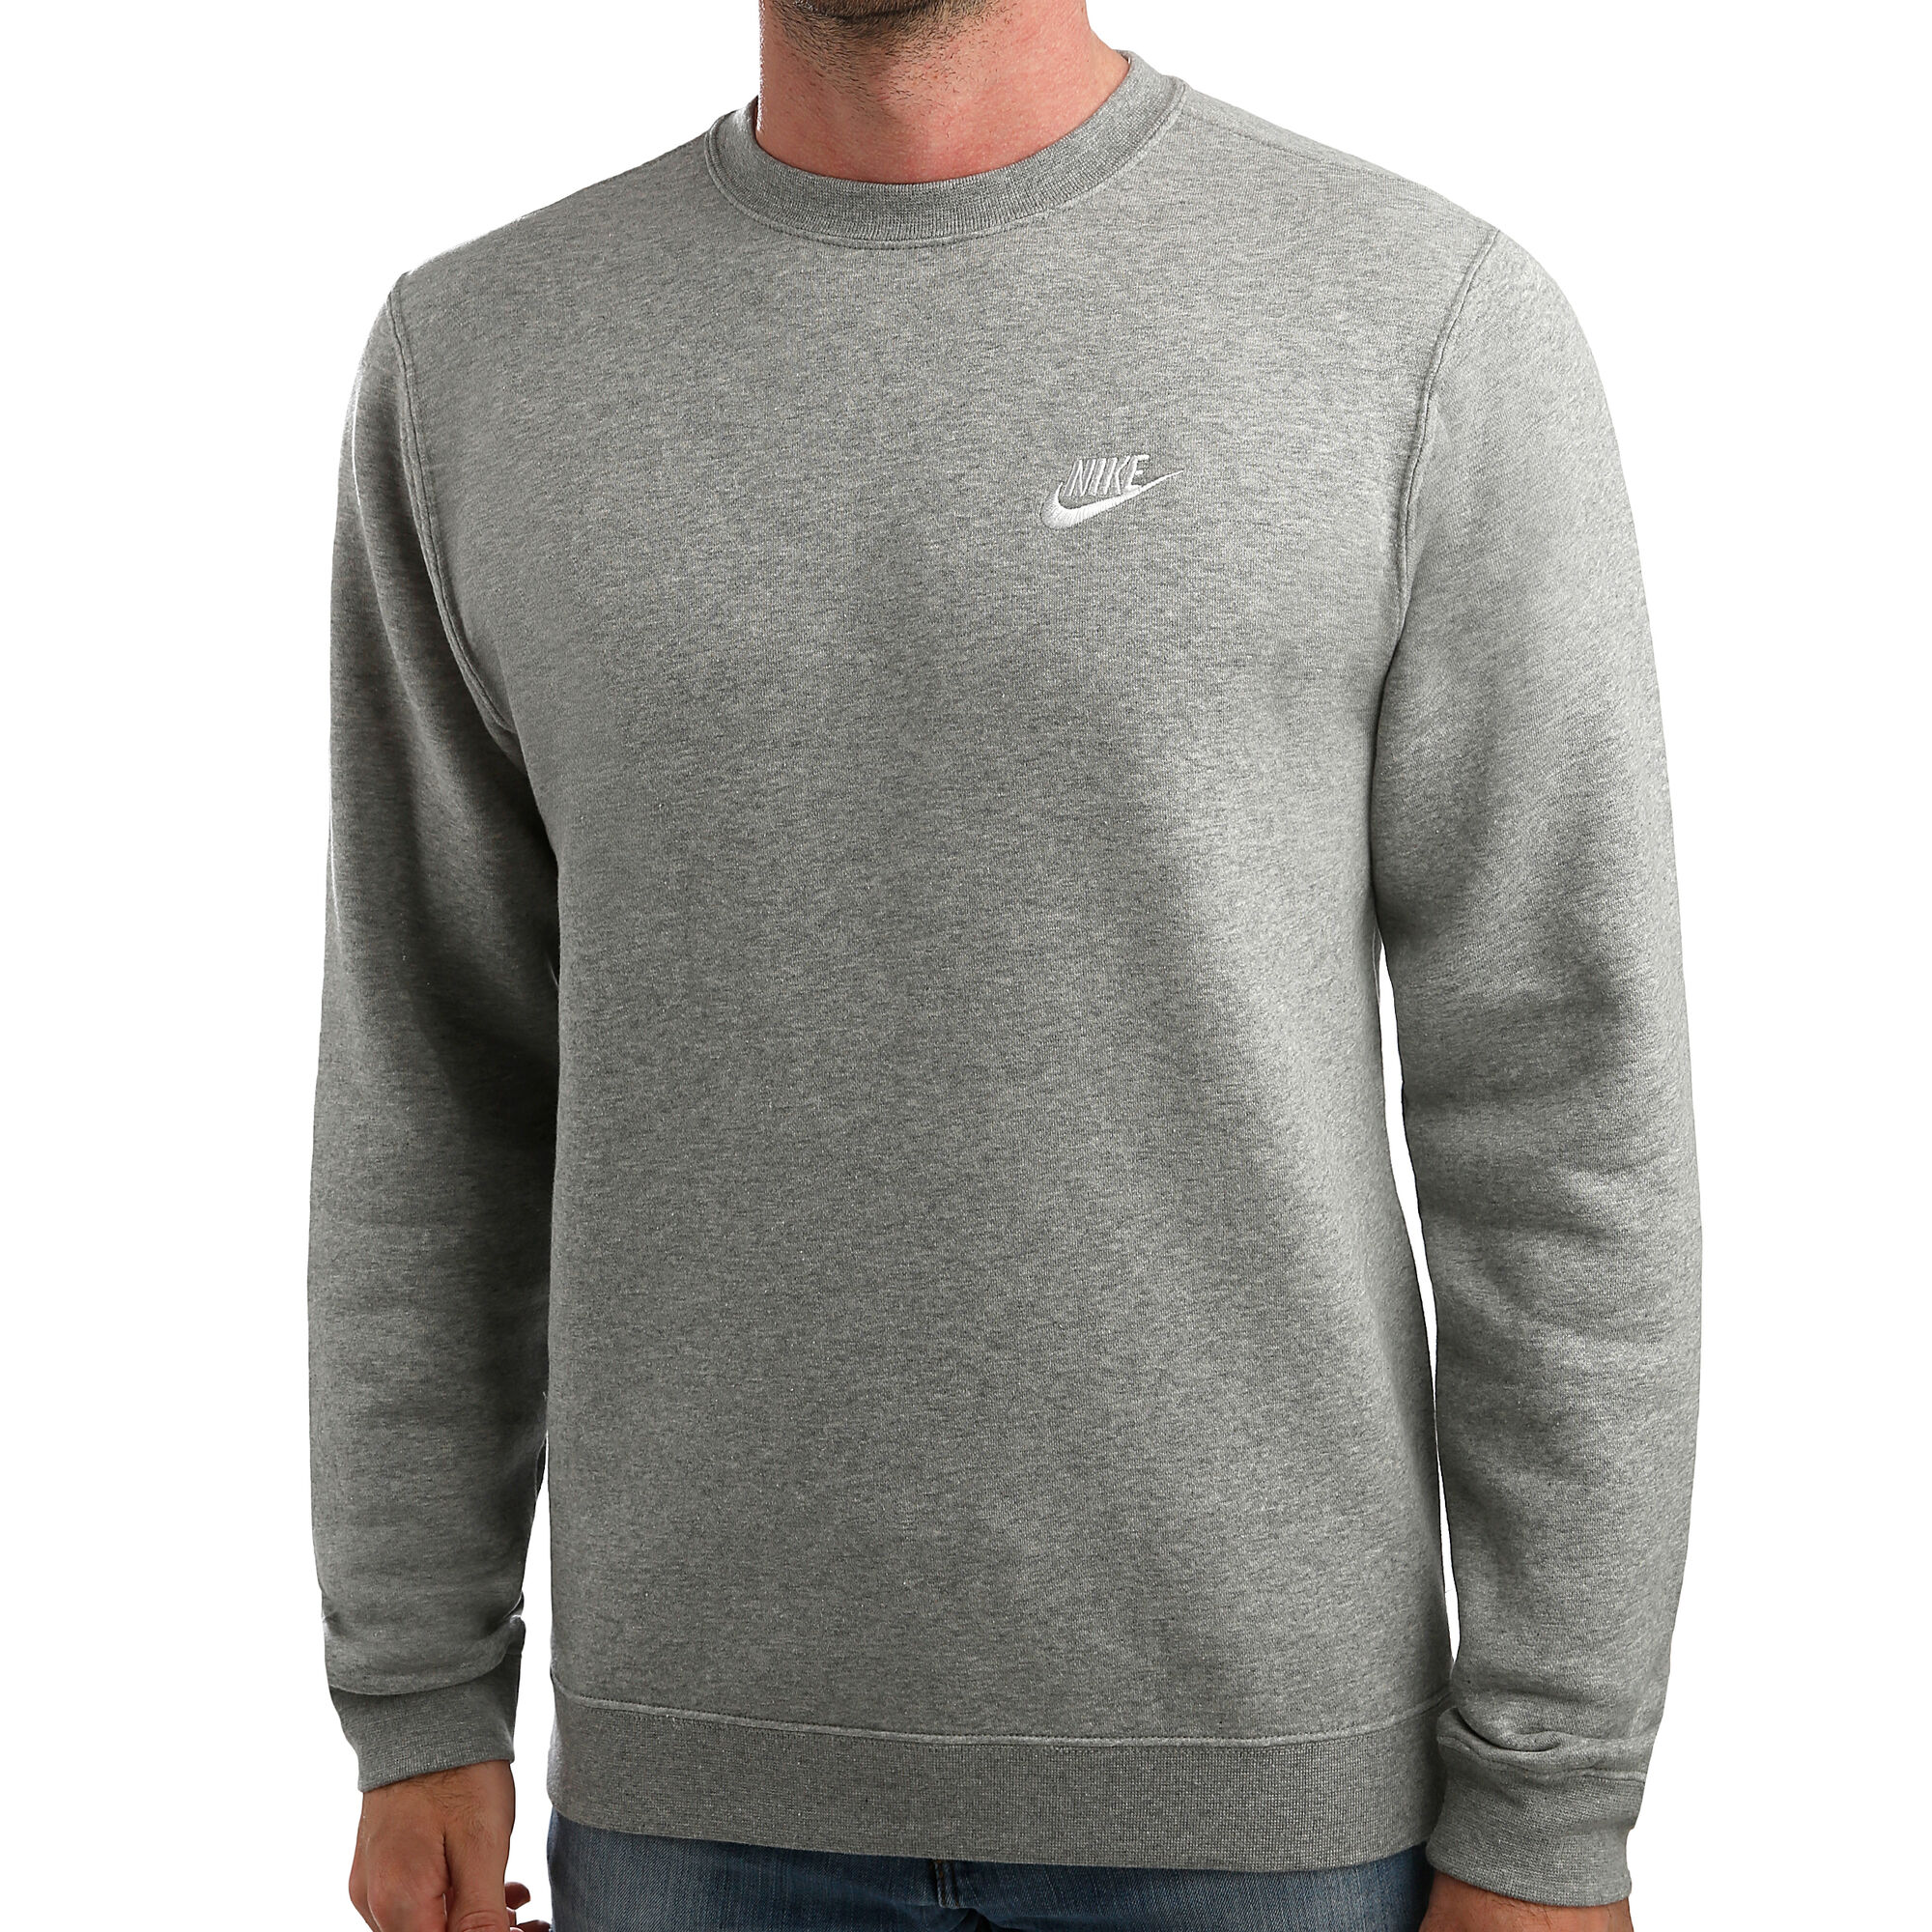 buy Nike Sportswear Crew Long Sleeve Men - Dark Grey, White online ...